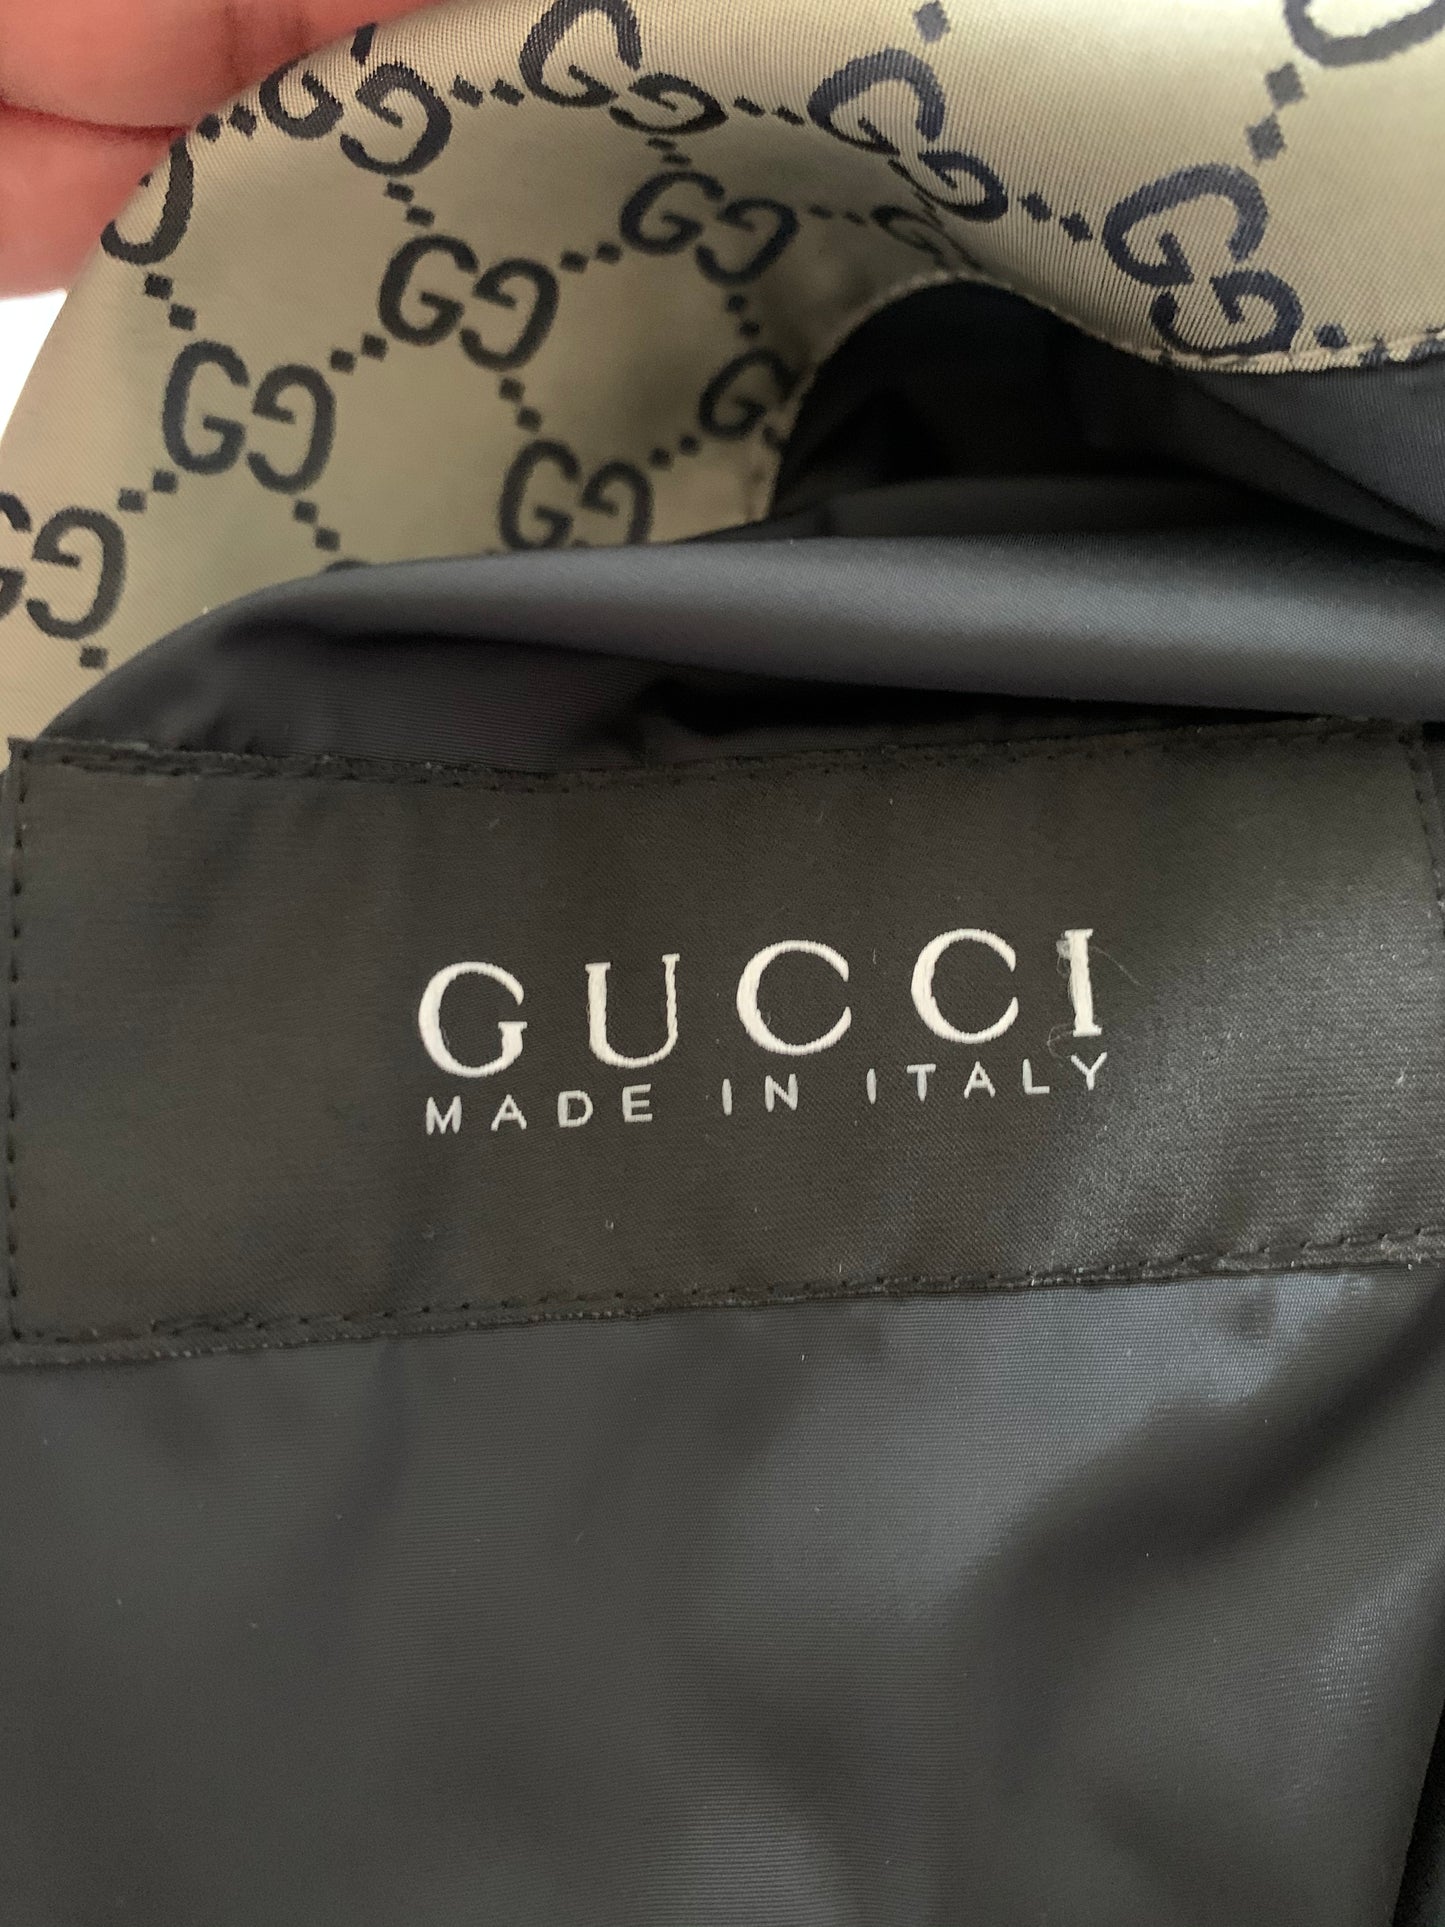 Gucci GG Canvas Zip Up Nylon Bomber Jacket